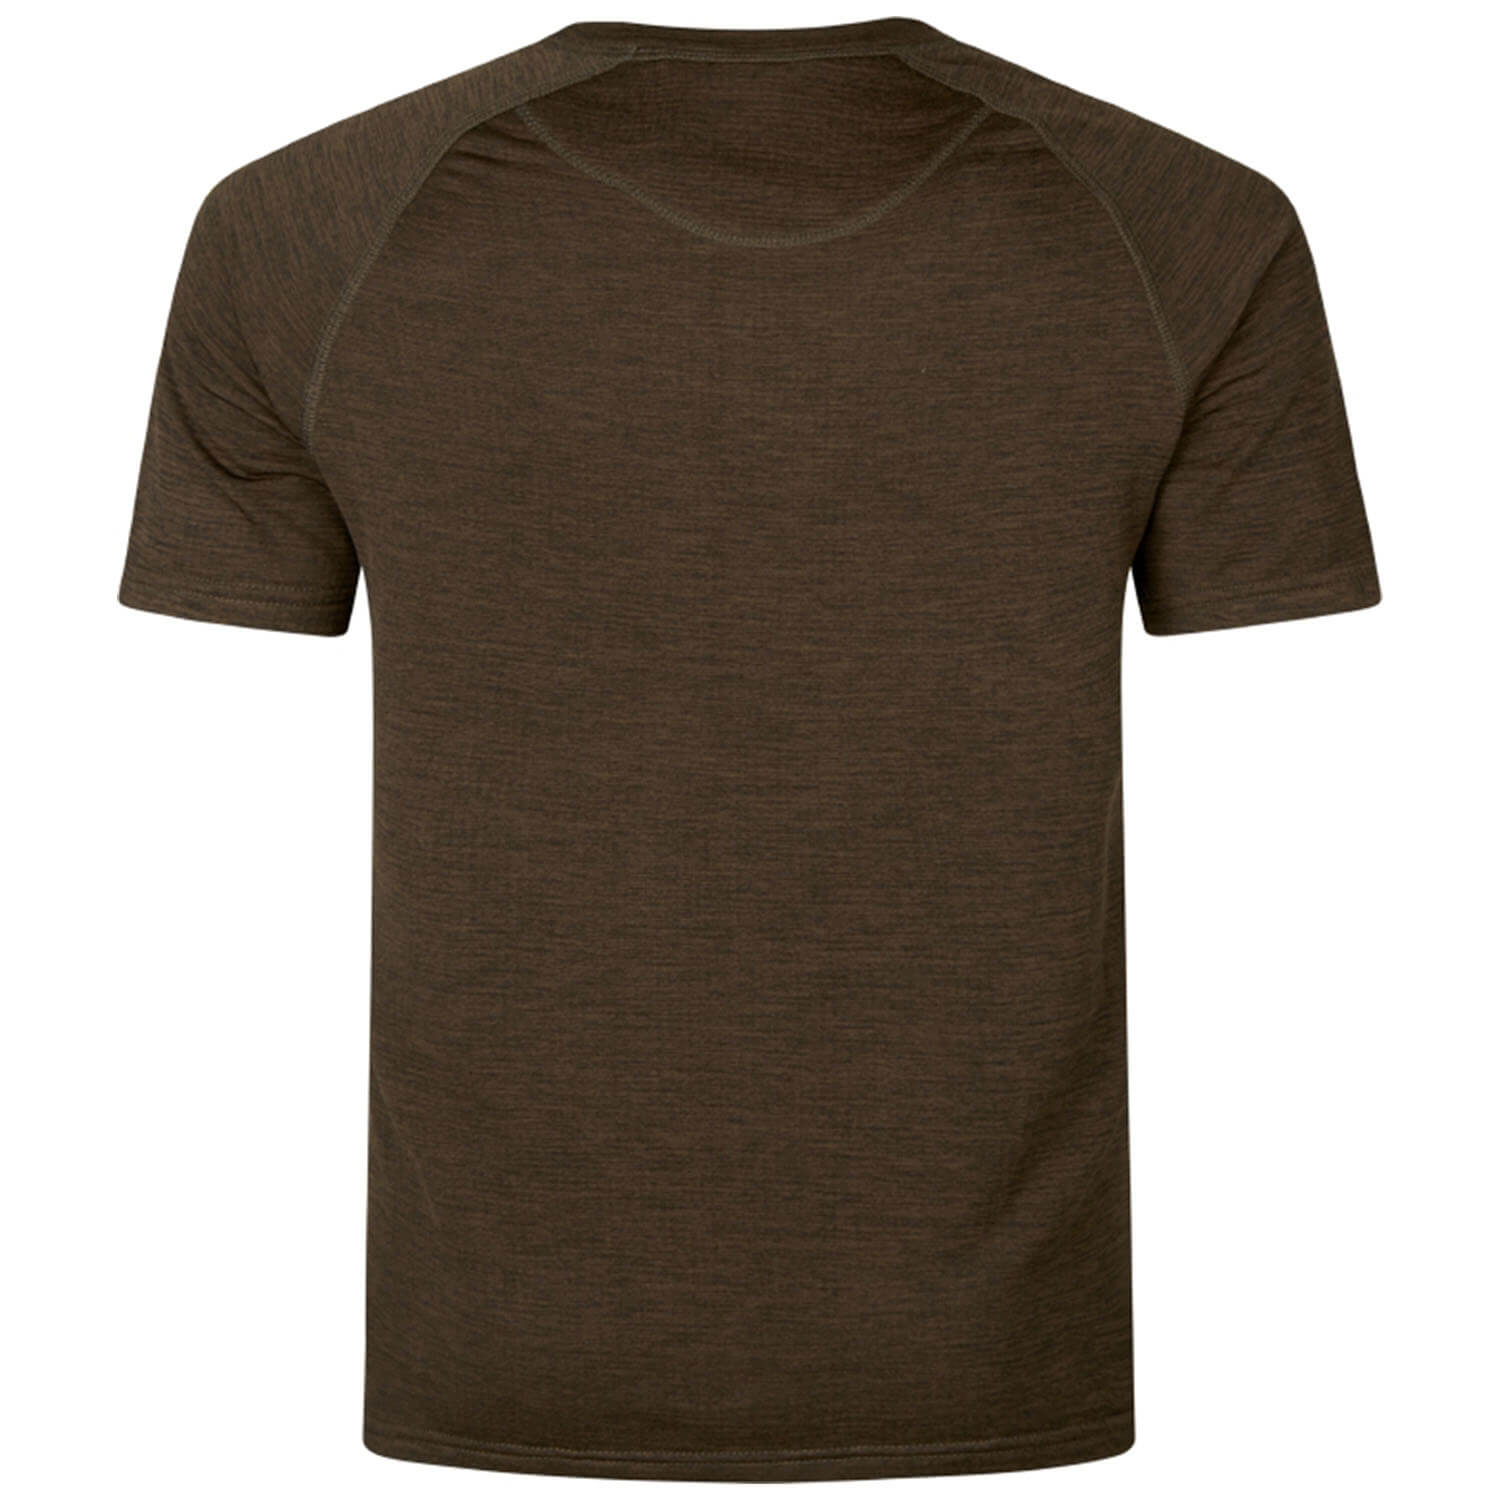 Seeland T-Shirt Active (Demitasse brown)